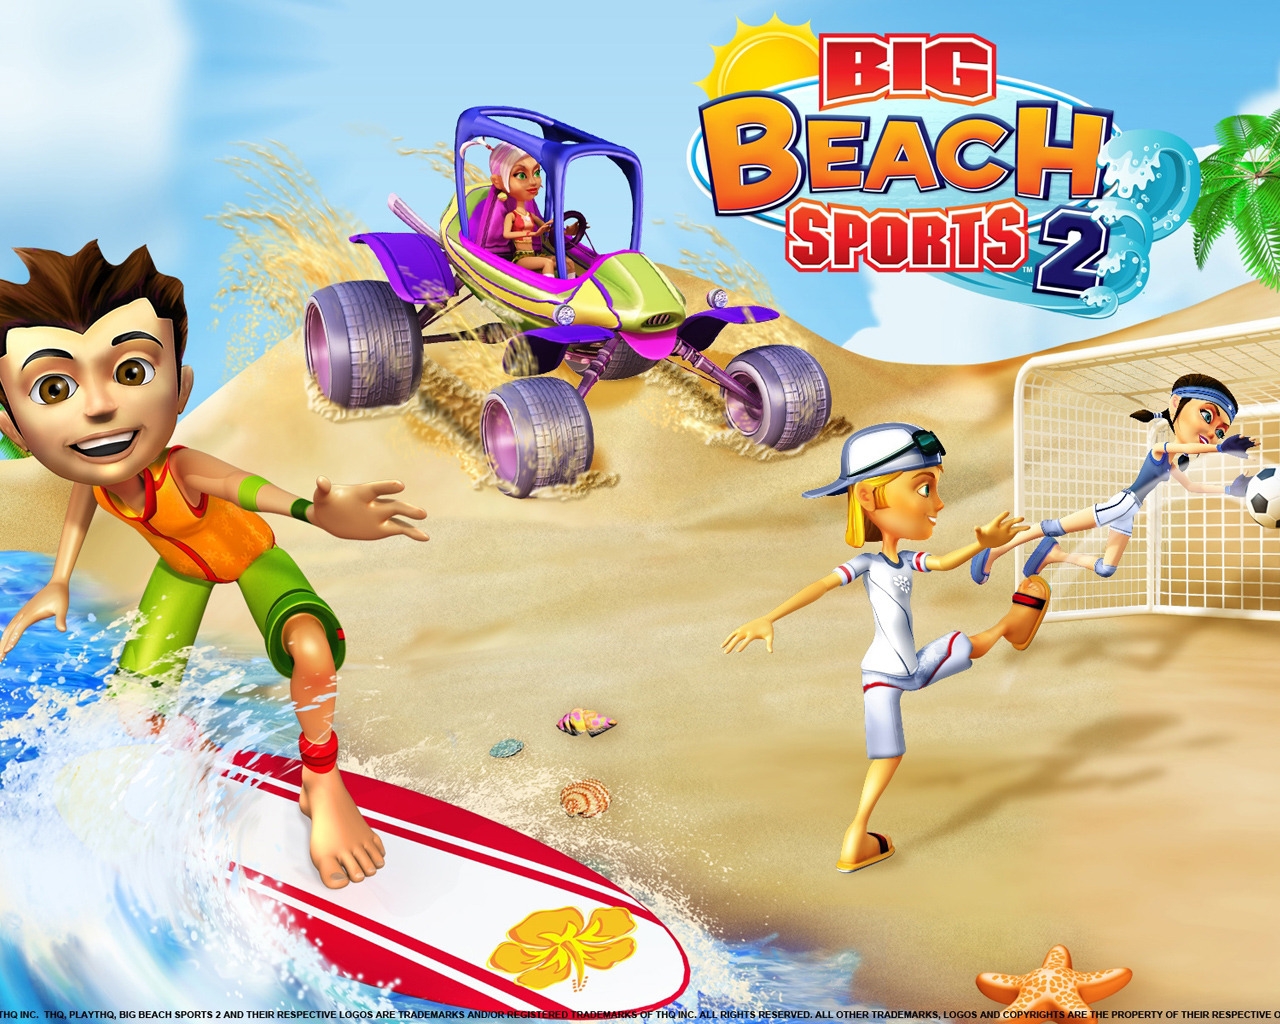 Big Beach Sports 2 for 1280 x 1024 resolution